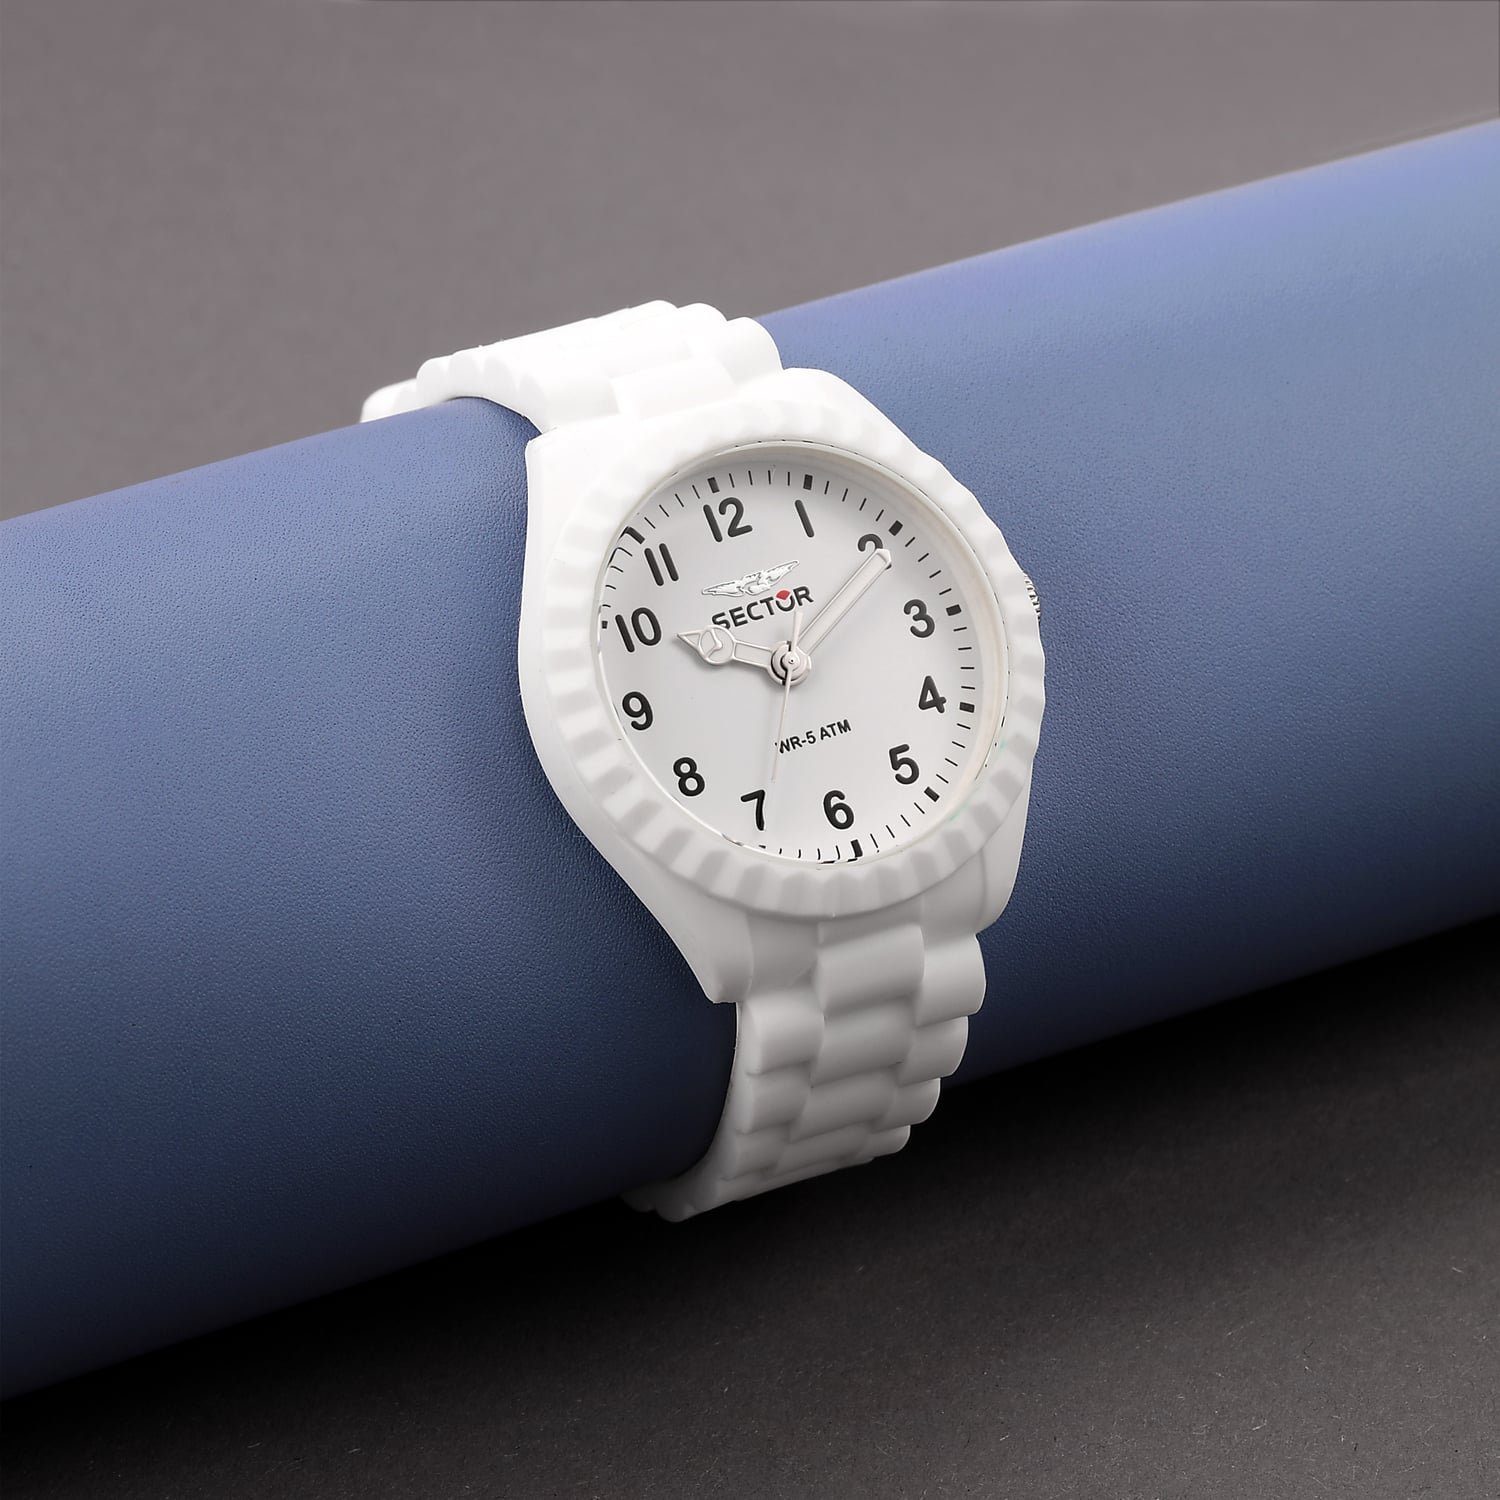 Silikonarmband Sector Analog, weiß, rund, Herren groß Quarzuhr Armbanduhr Armbanduhr 42mm), Sector (ca. Fashion Herren